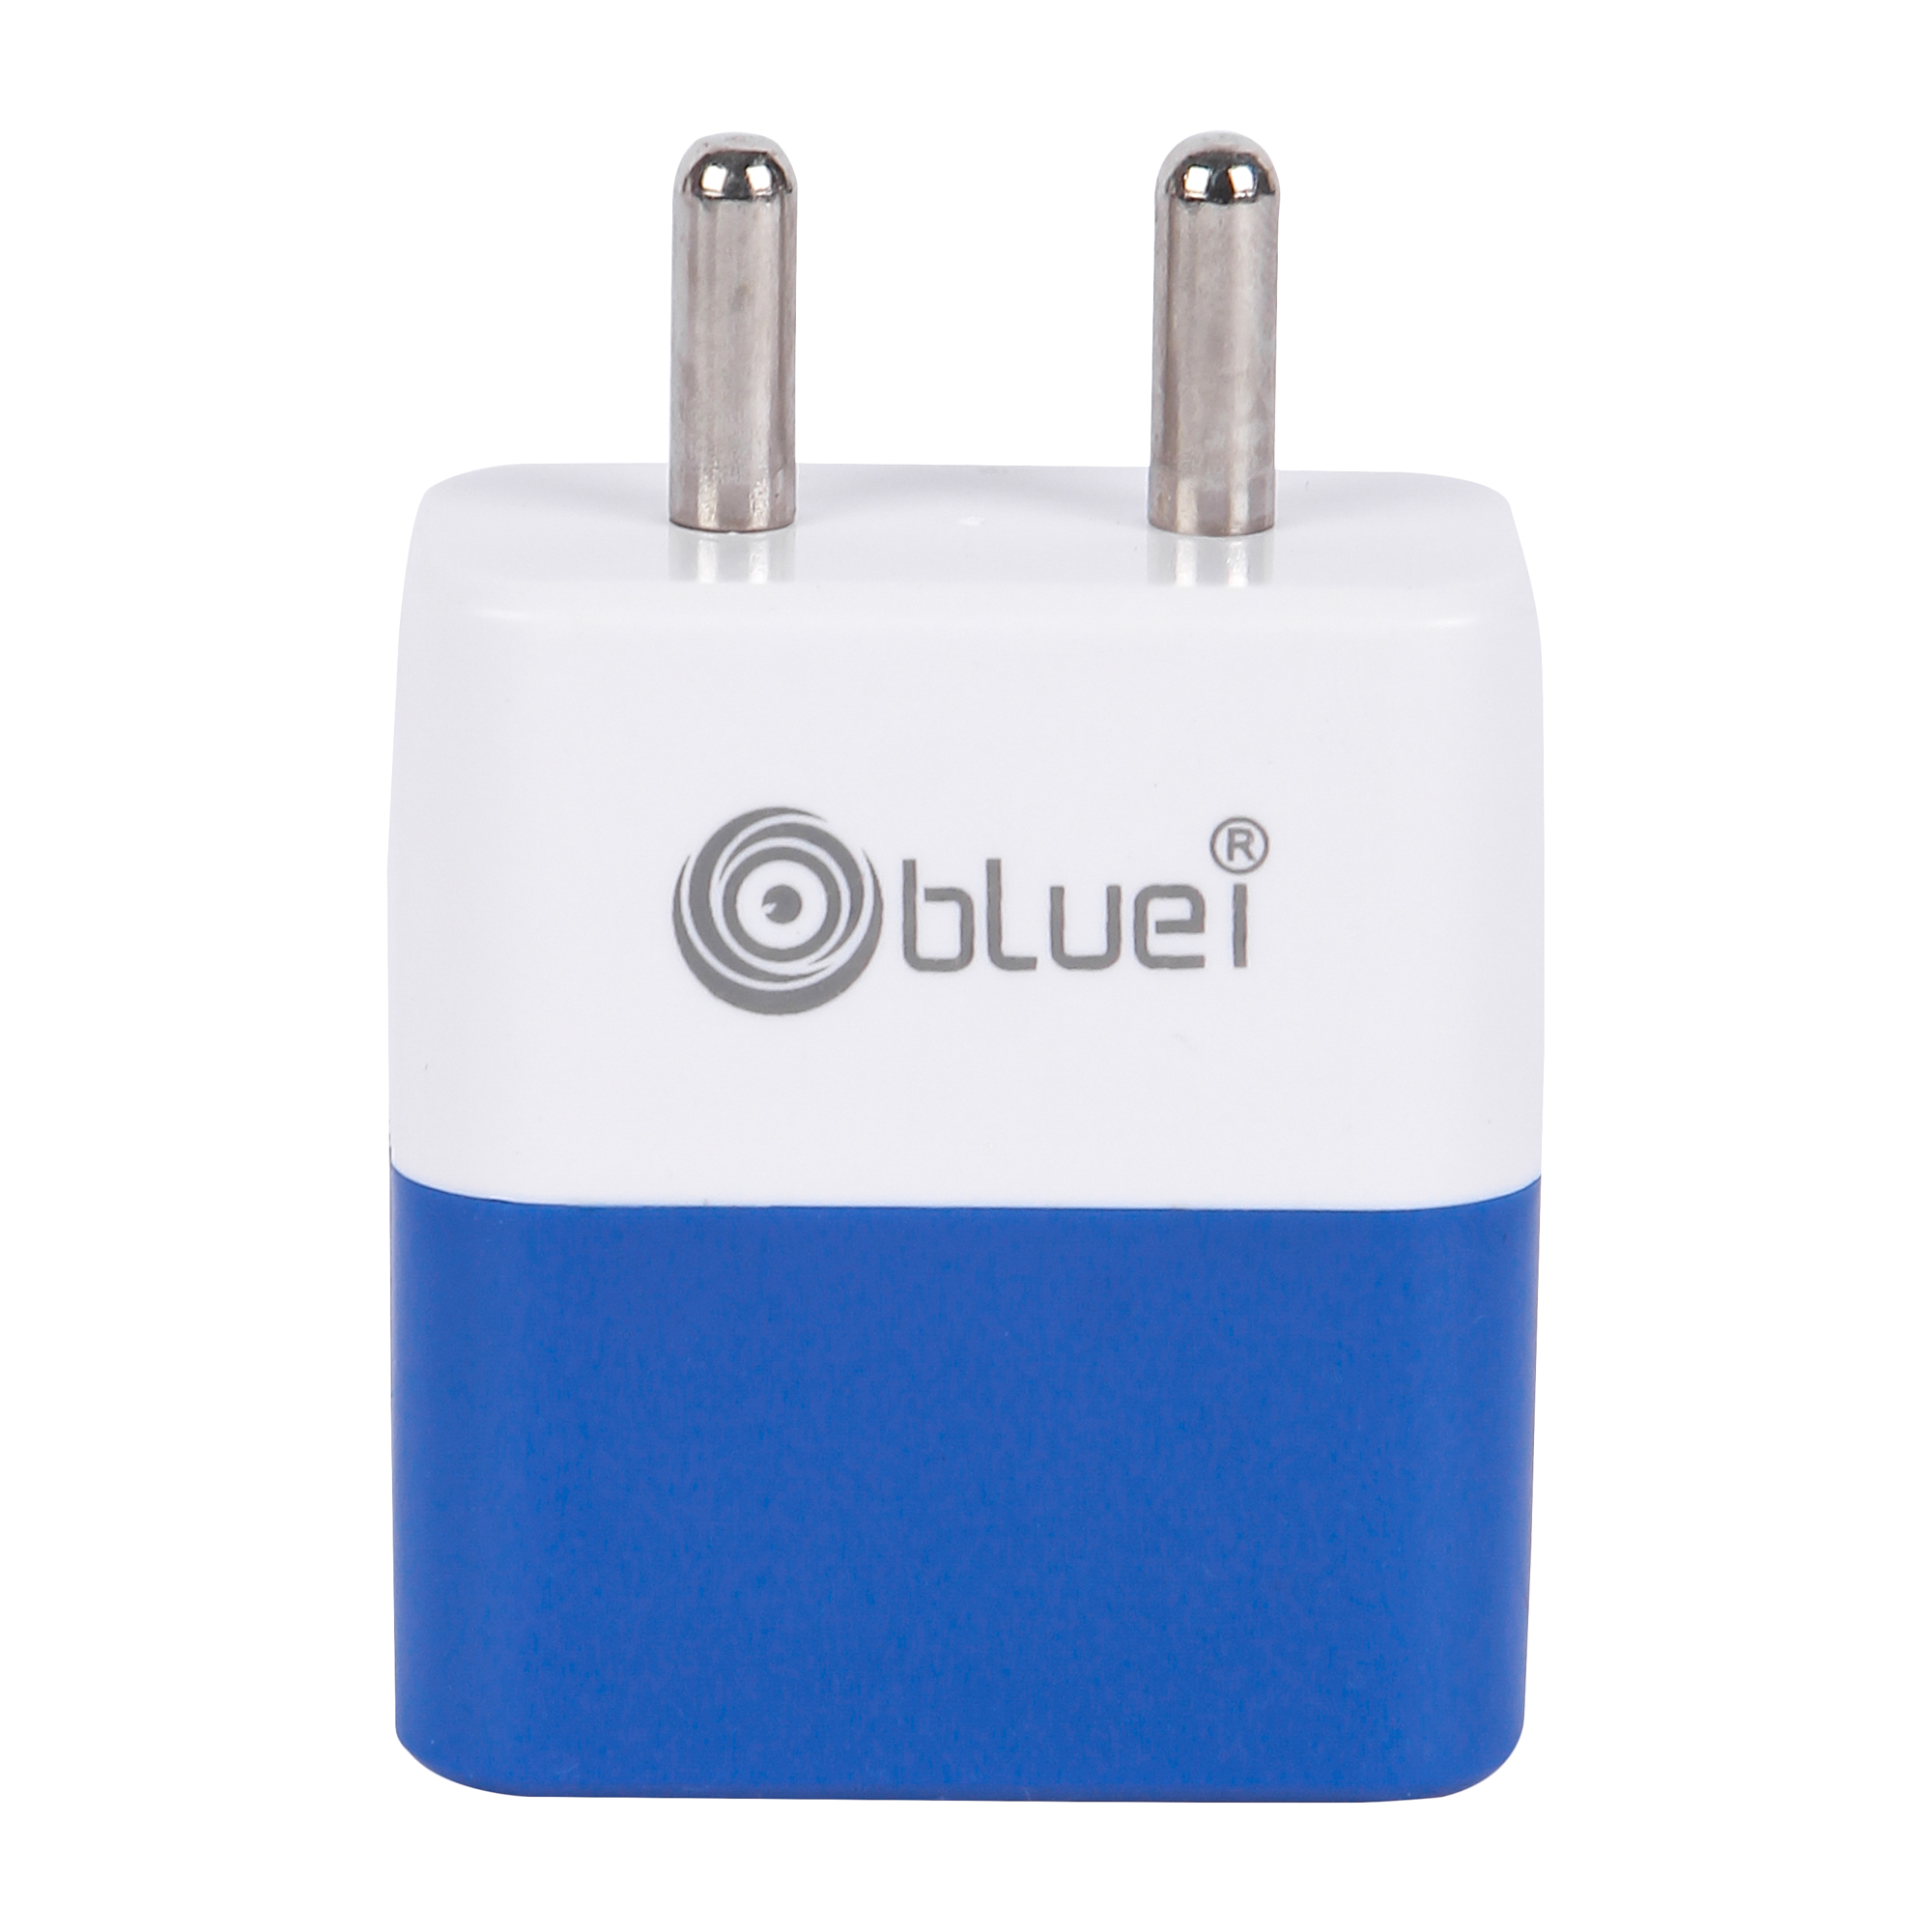 Bluei Tc-01 3.0 A, Dual Usb Mobile Charger